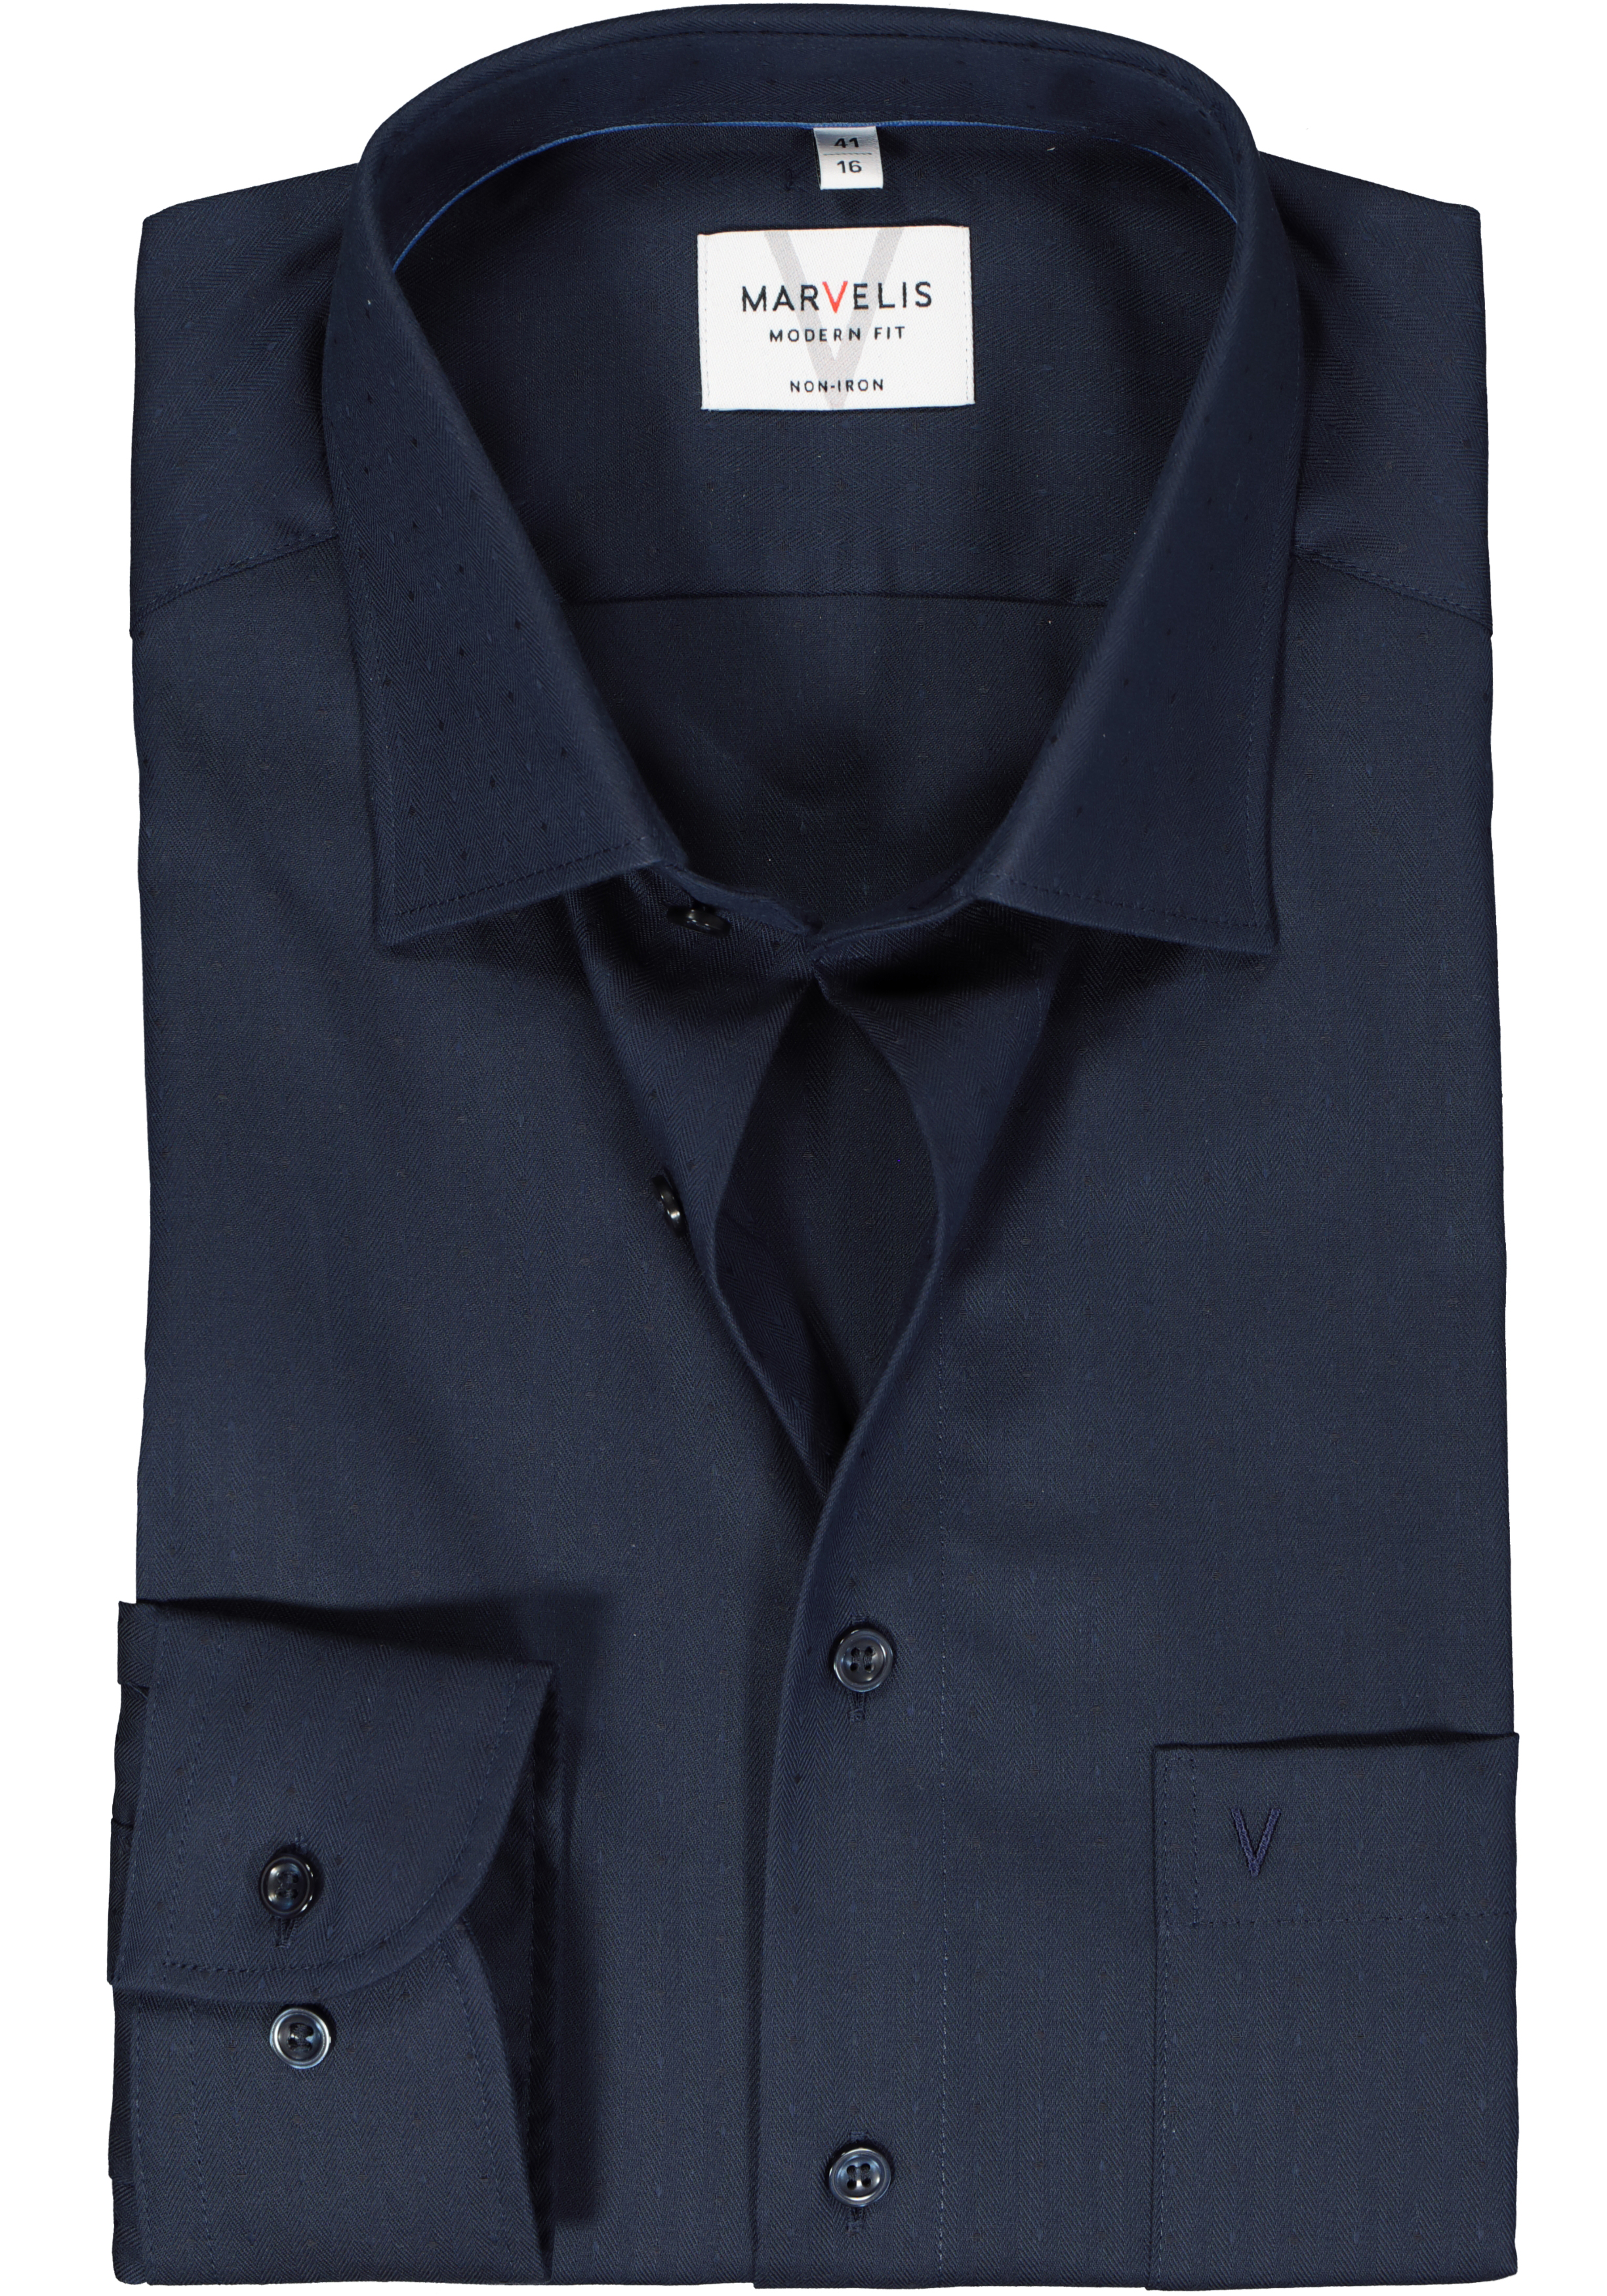 MARVELIS modern fit overhemd, mouwlengte 7, herringbone, donkerblauw